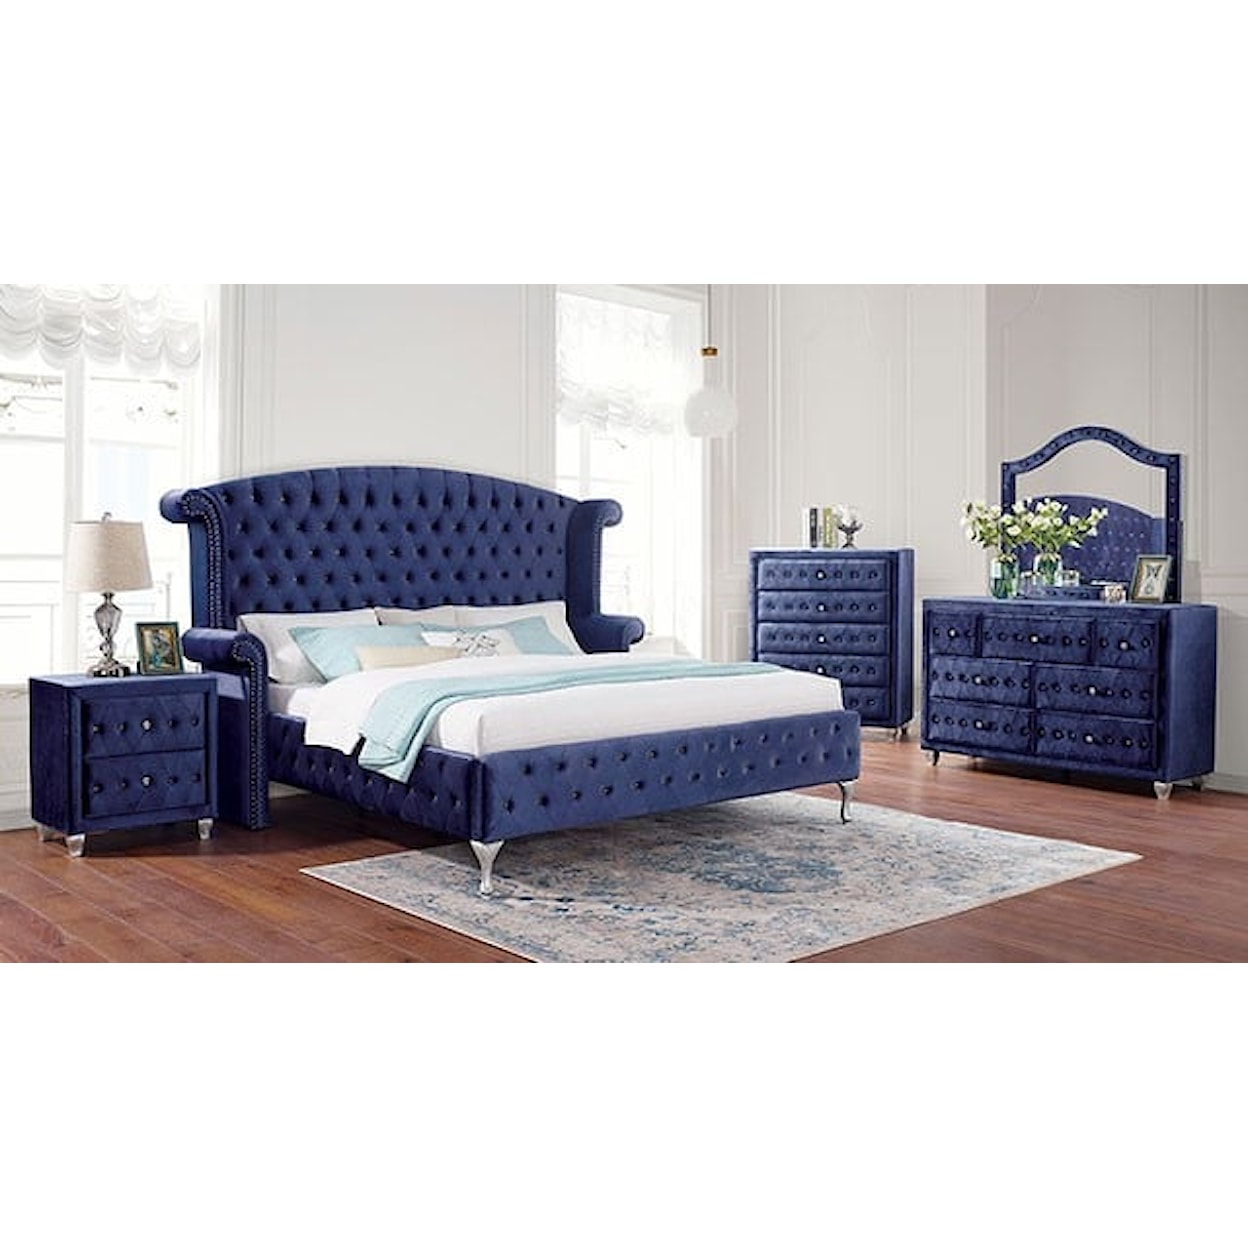 Furniture of America Alzir King Bed, Blue